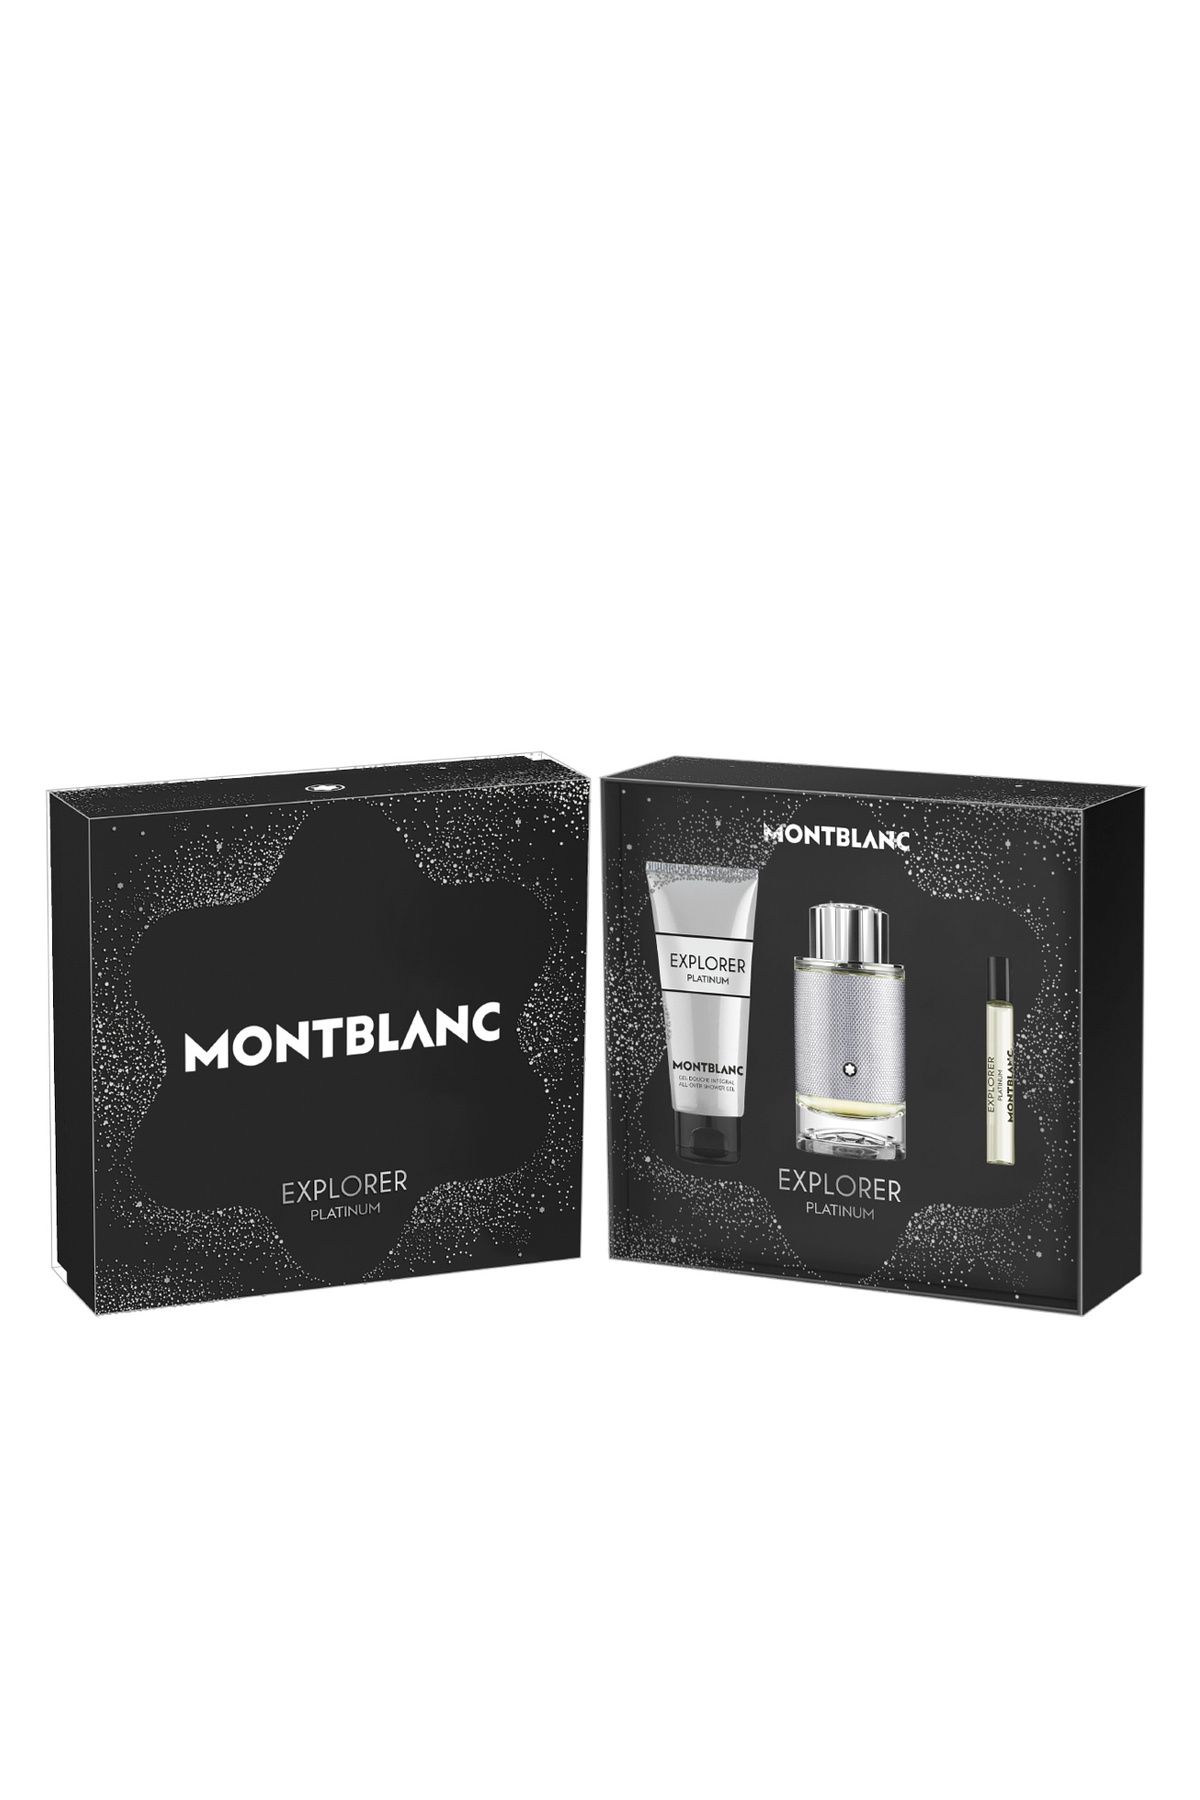 Mont Blanc Explorer Platinum Edp 100 ml Parfüm Set